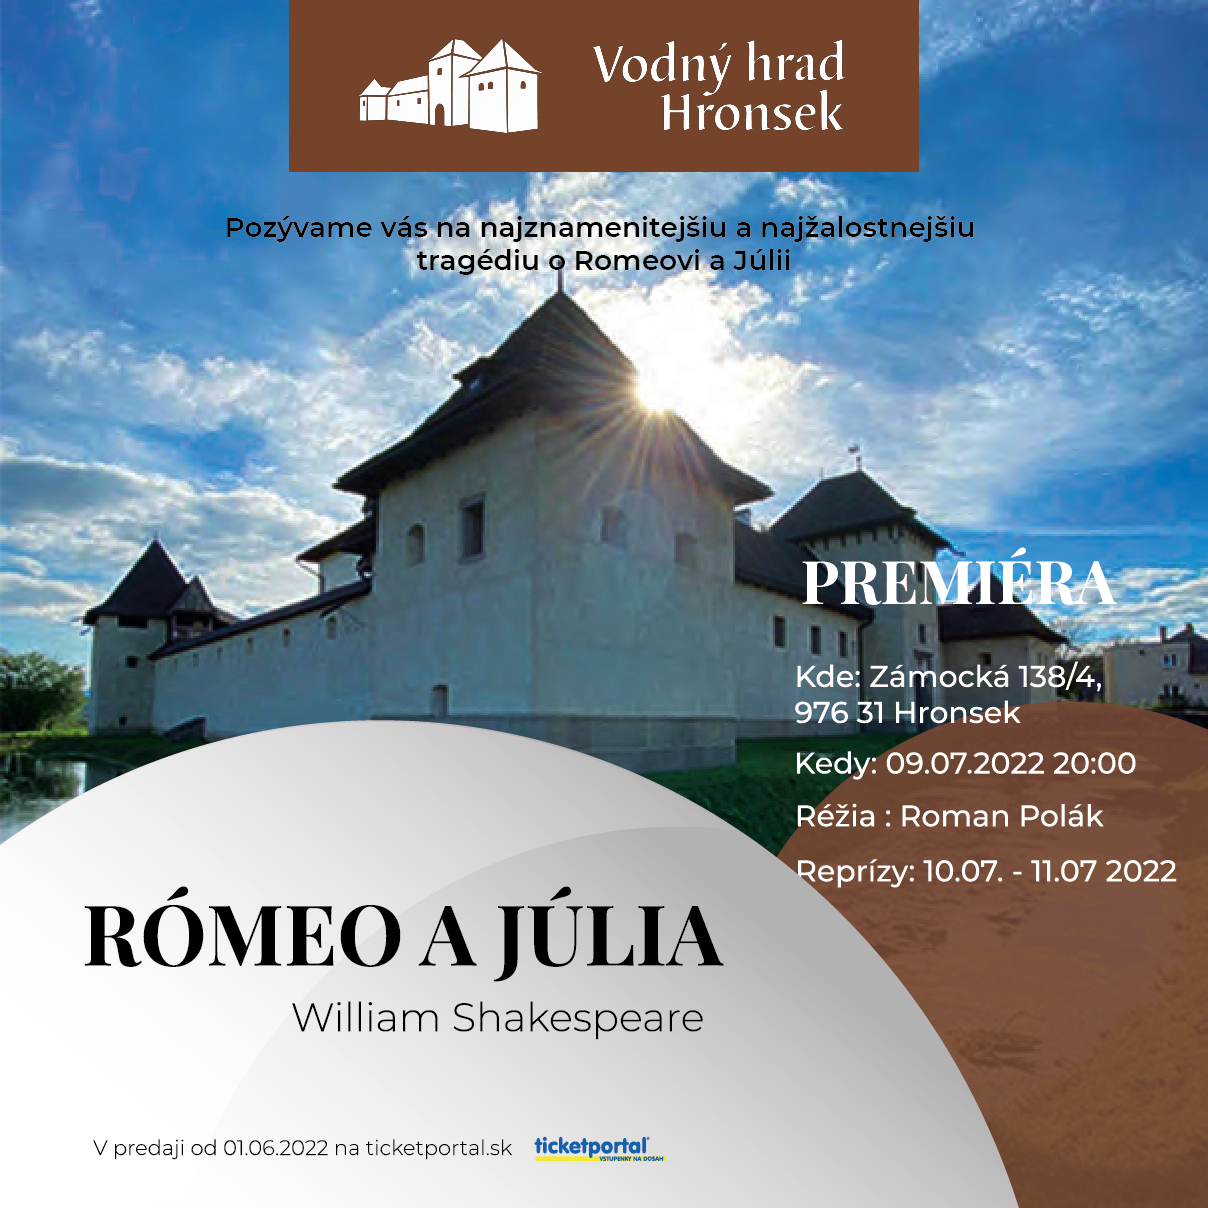 picture Vodný hrad Hronsek - Romeo a Júlia